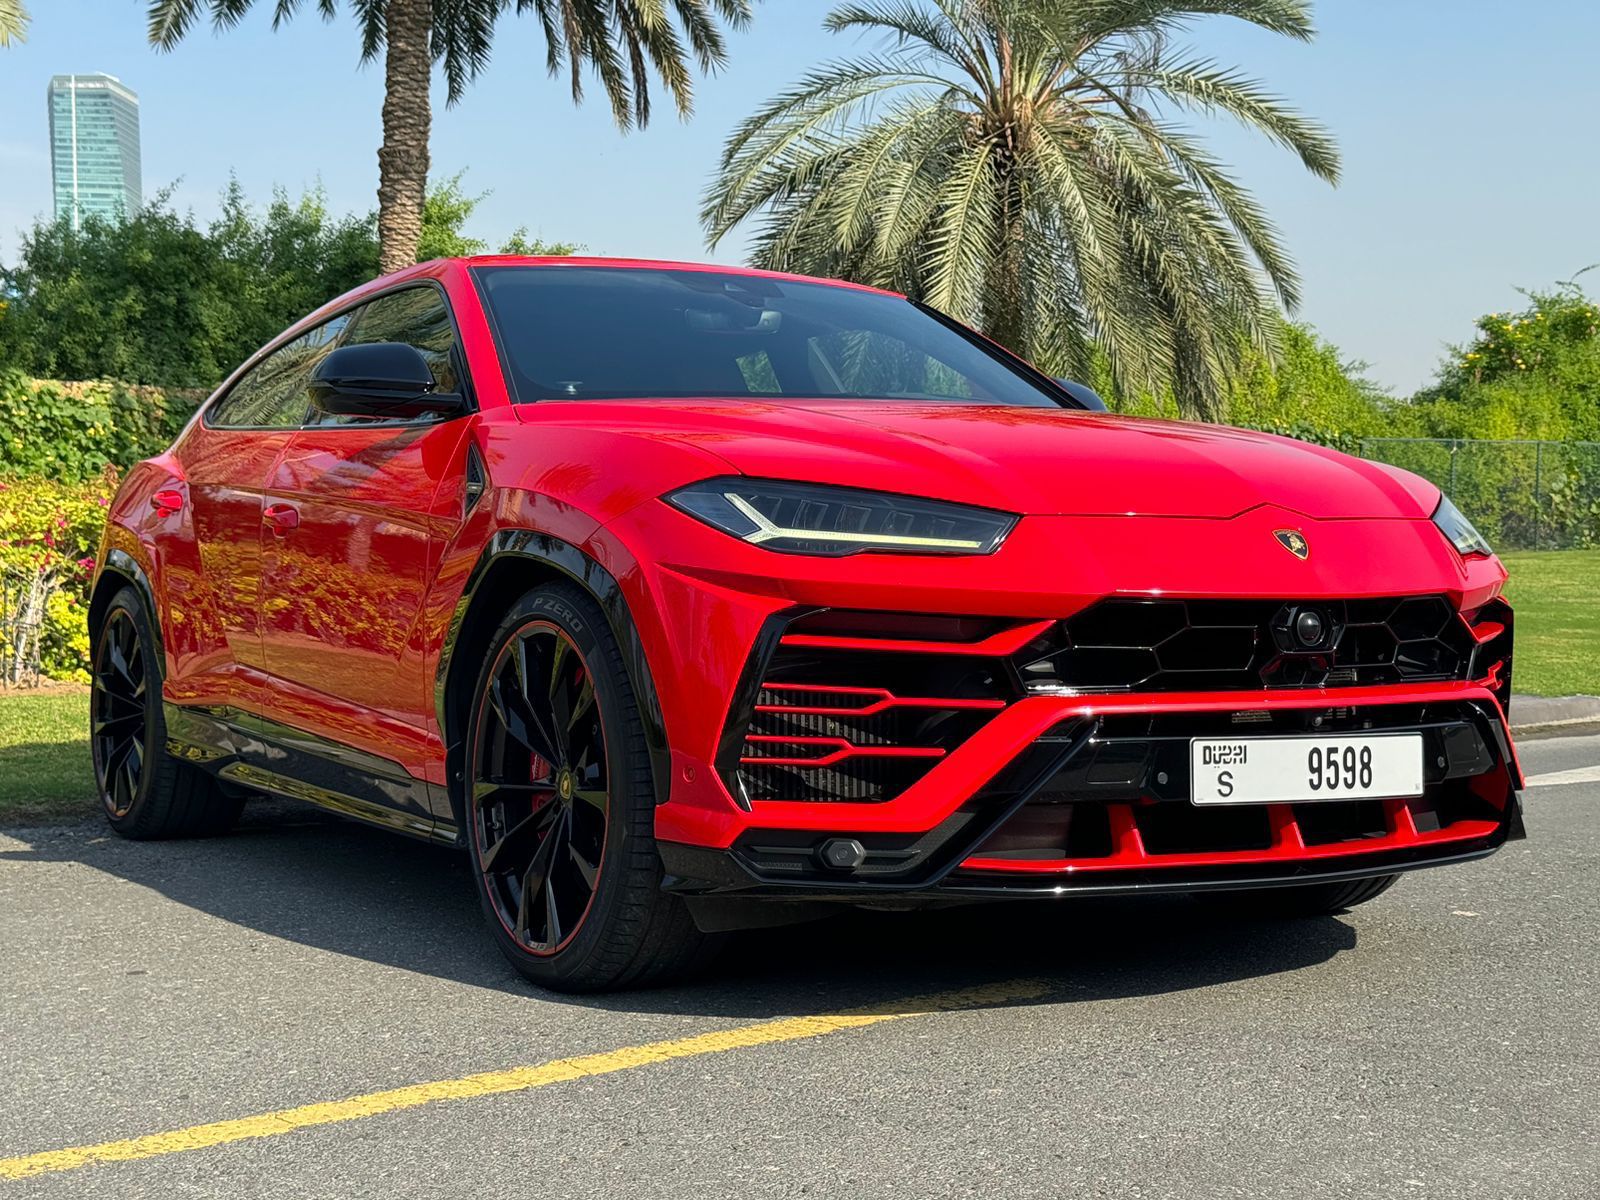 Rent Red Lamborghini Dubai